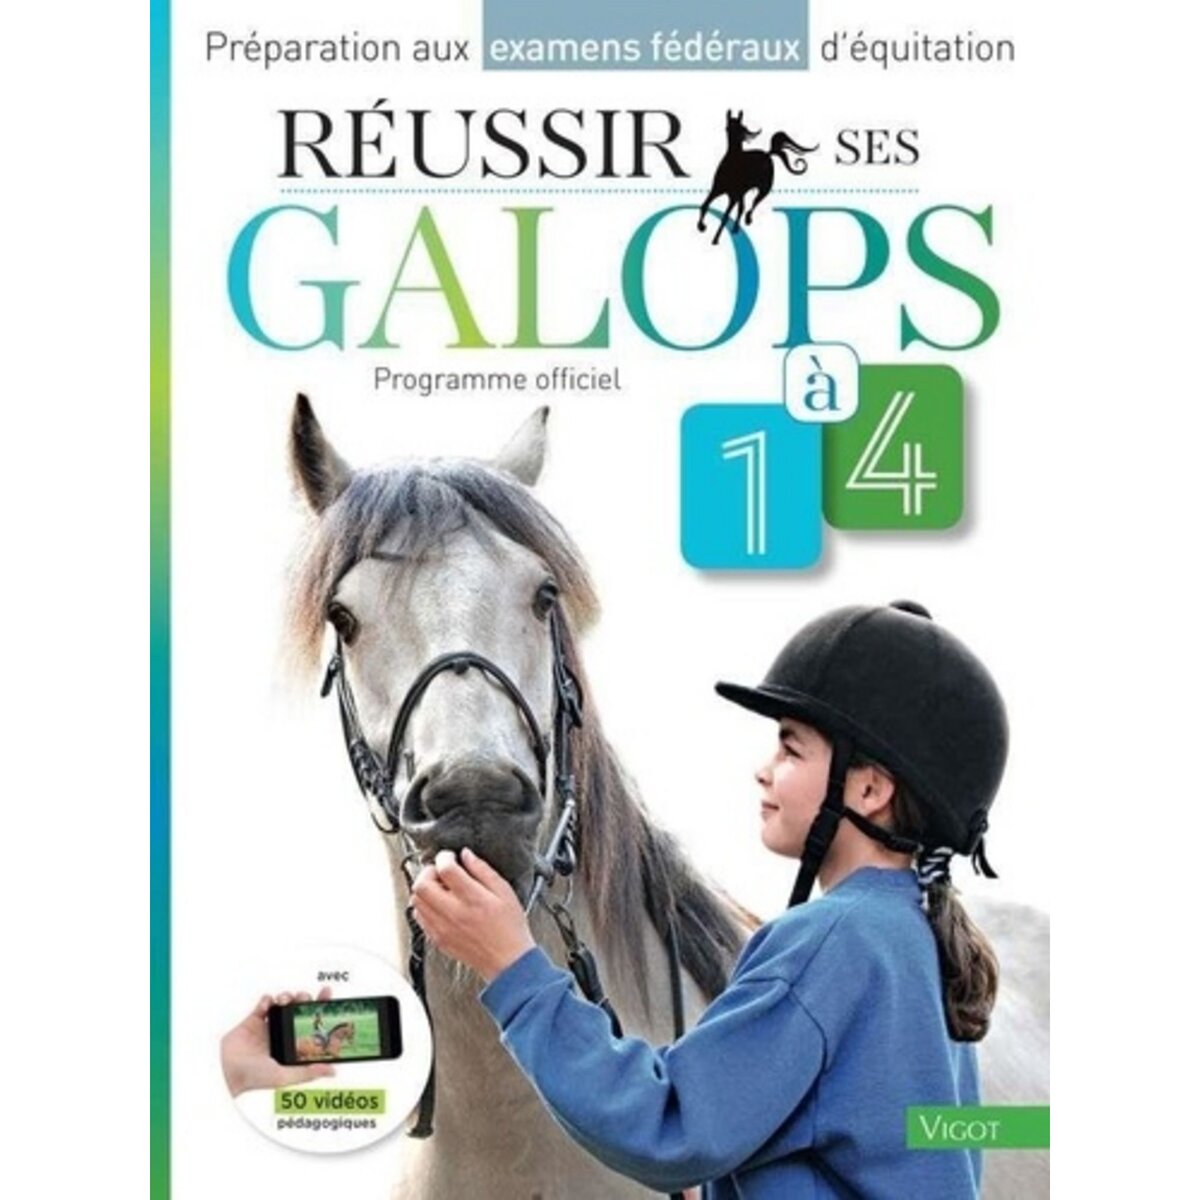  REUSSIR SES GALOPS 1 A 4. PREPARATION AUX EXAMENS FEDERAUX D'EQUITATION, Henry Guillaume